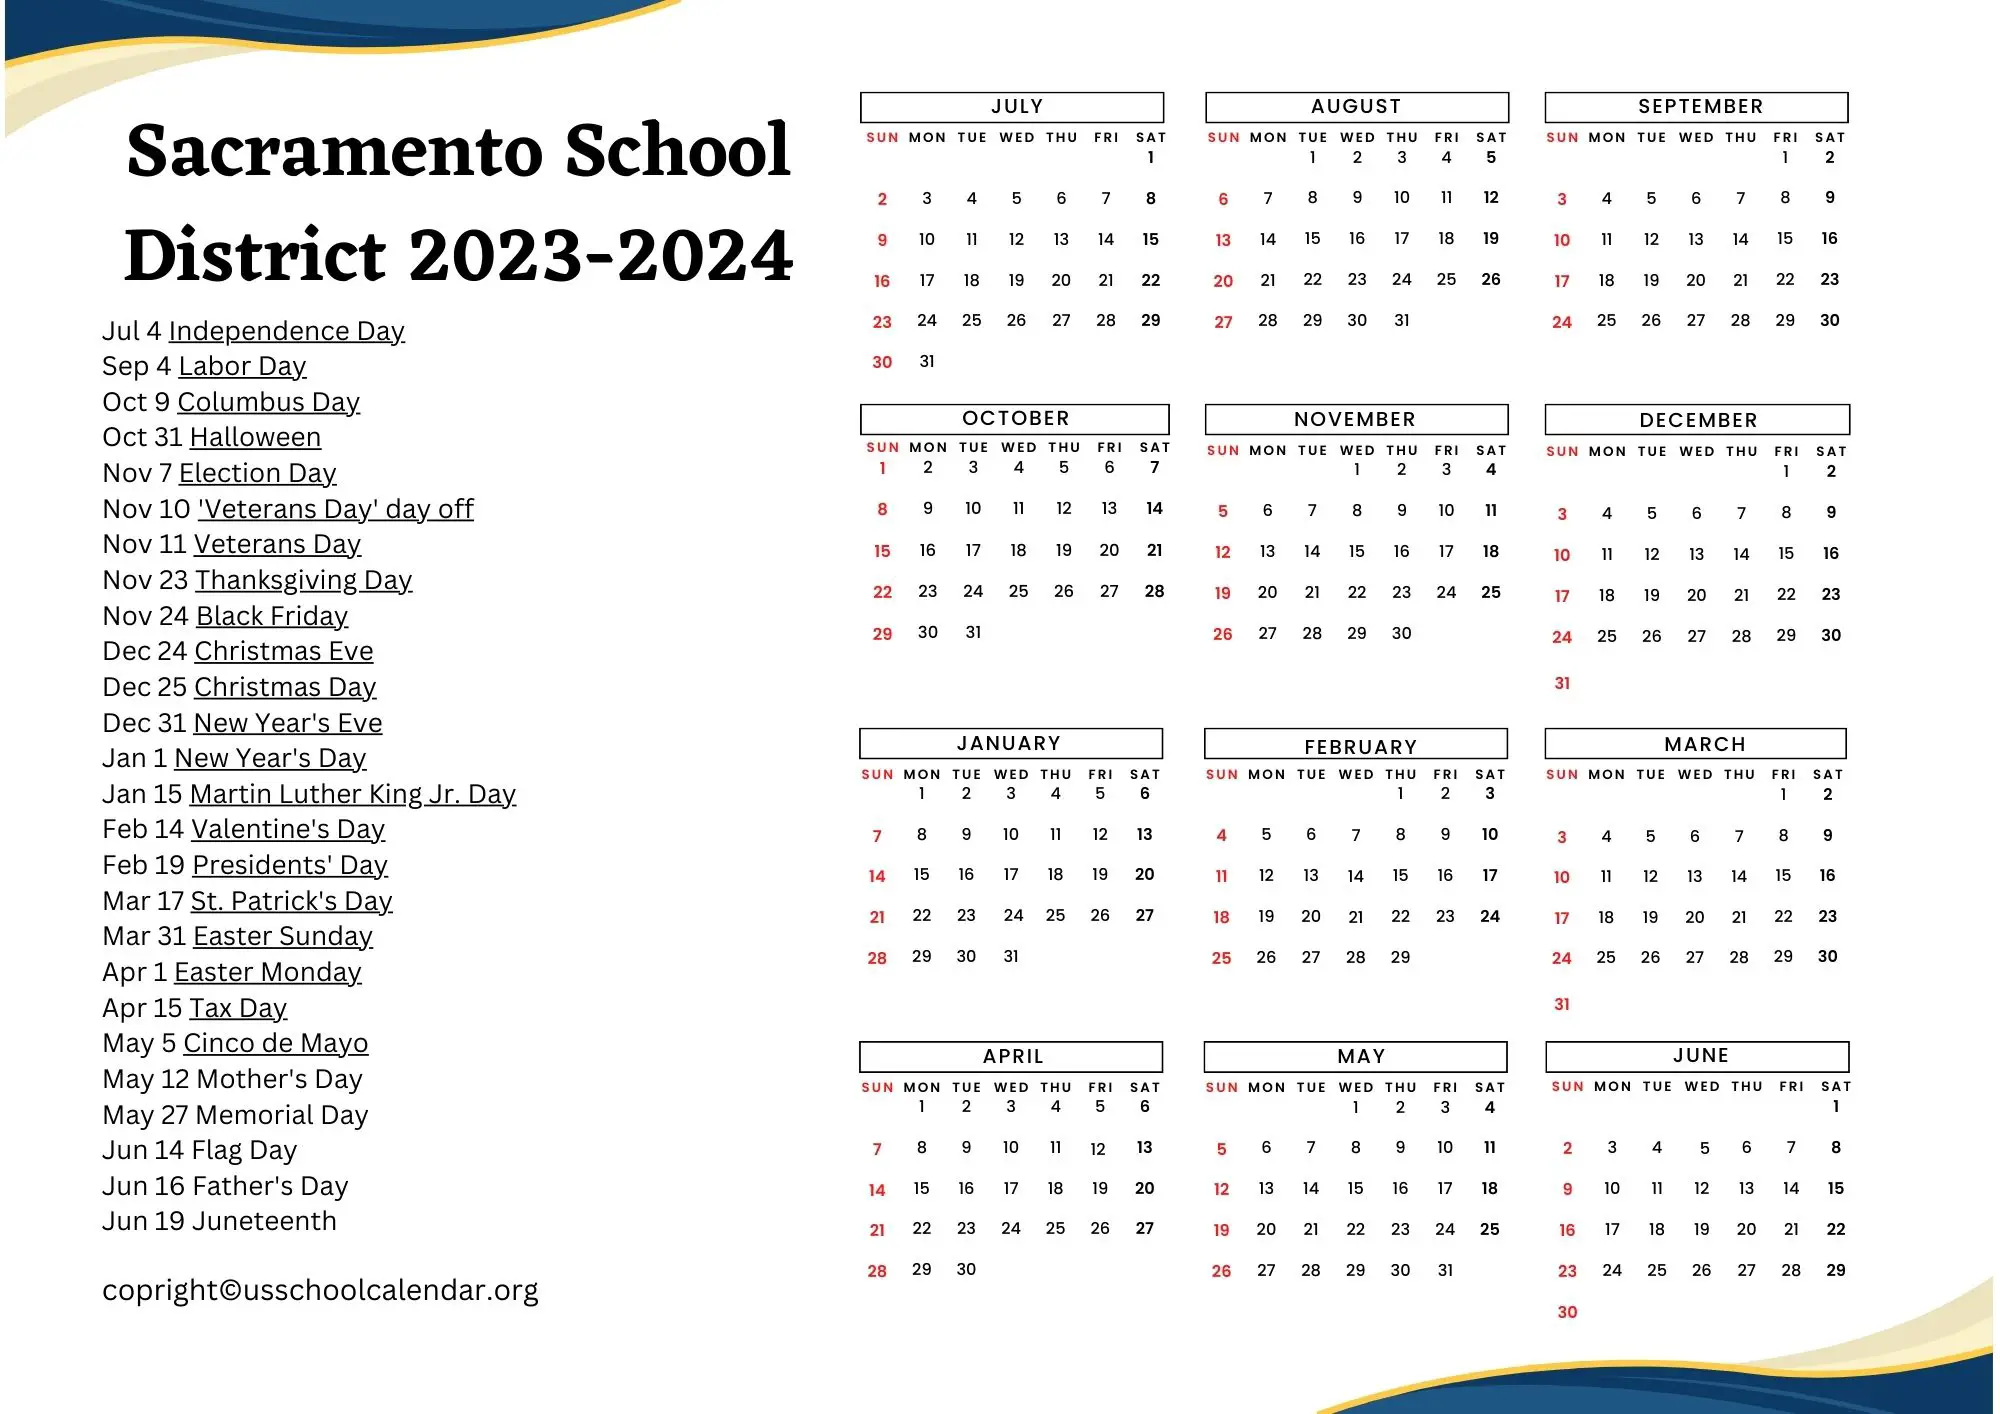 Sacramento School District Calendar with Holidays 20232024